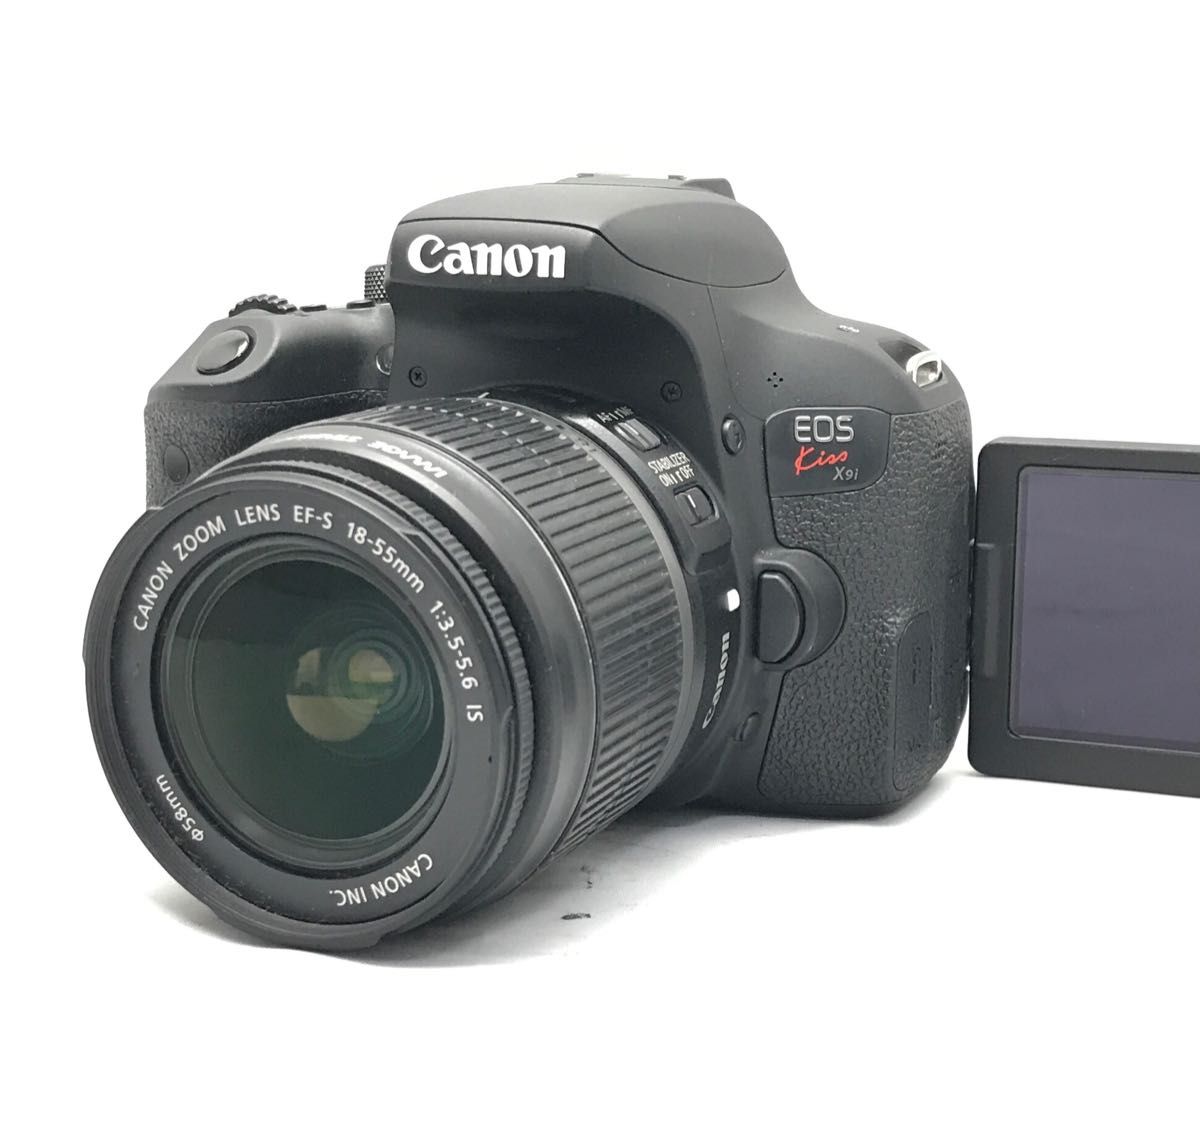 Canon EOS kiss x9i レンズセット♪安心フルセット♪